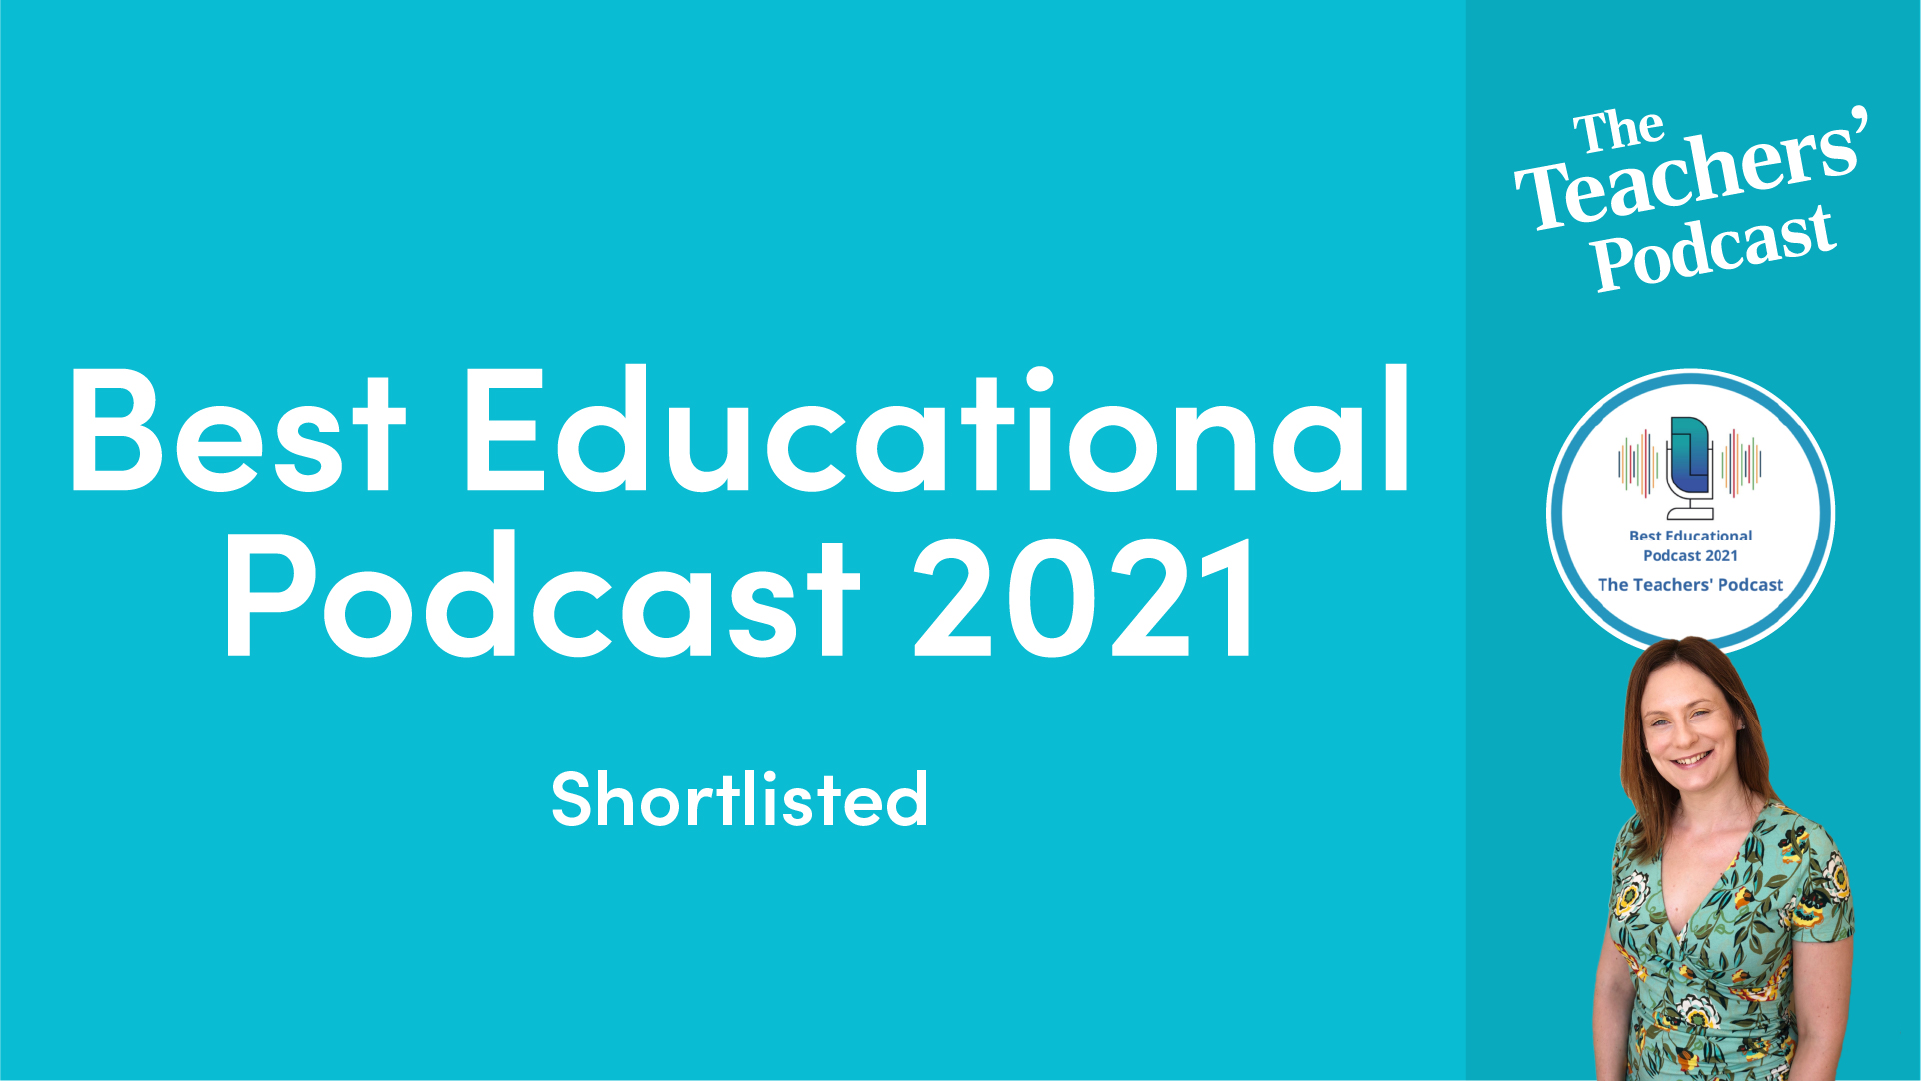 The Teachers’ Podcast Named Best Educational Podcast 2021